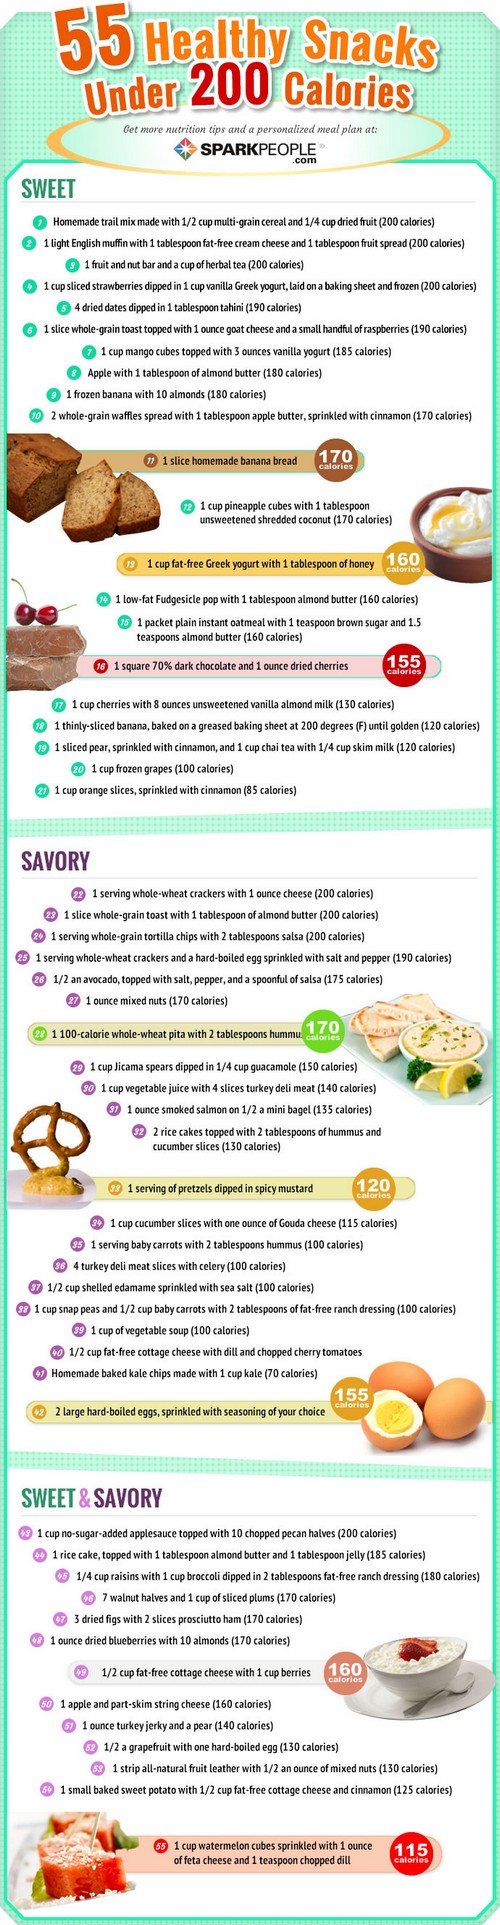 55 Healthy Snacks Under 200 Calories Diet Recipes Blog